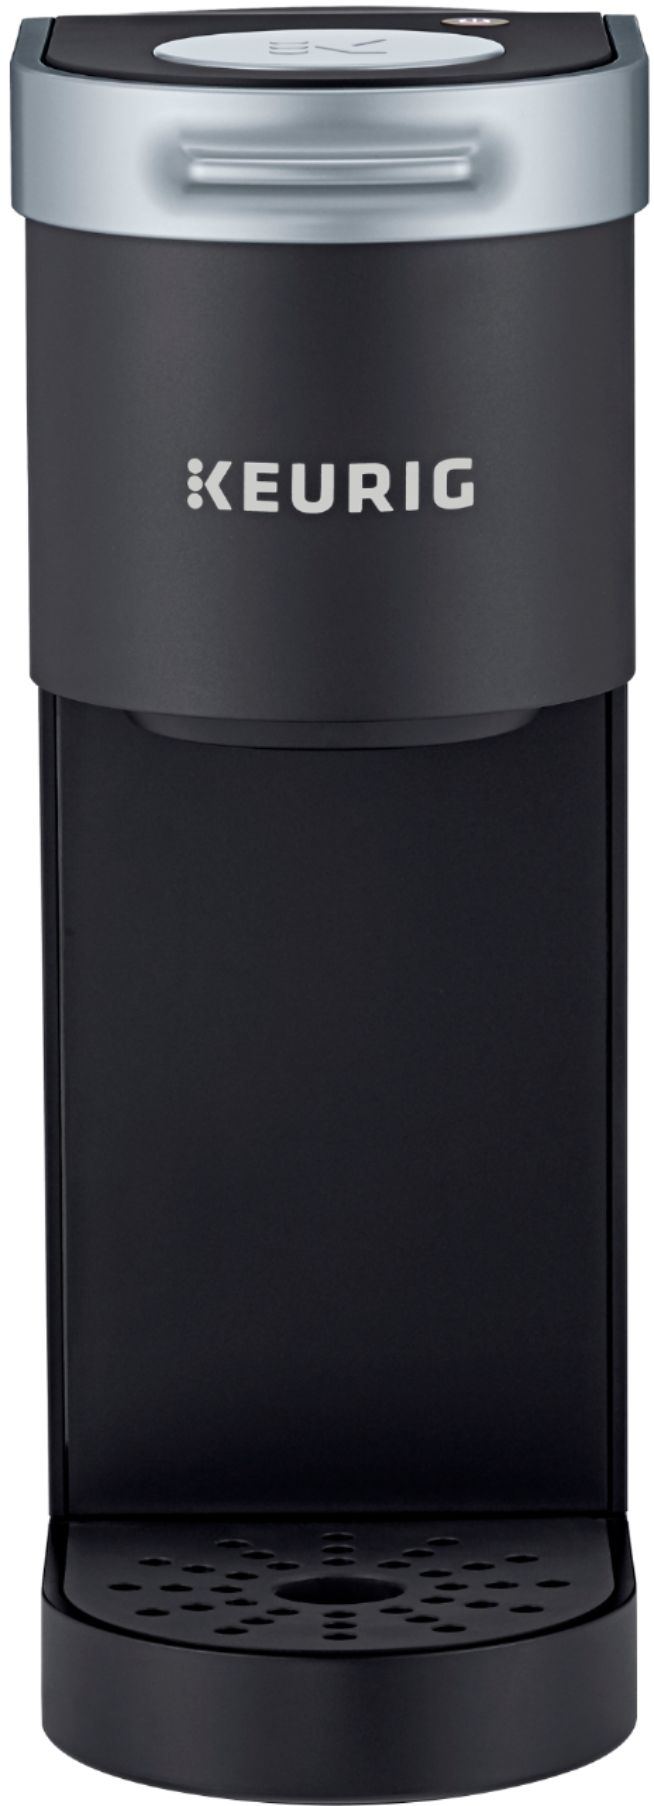 Keurig K-Mini Single Serve Coffee Maker - Black, 1 ct - Harris Teeter